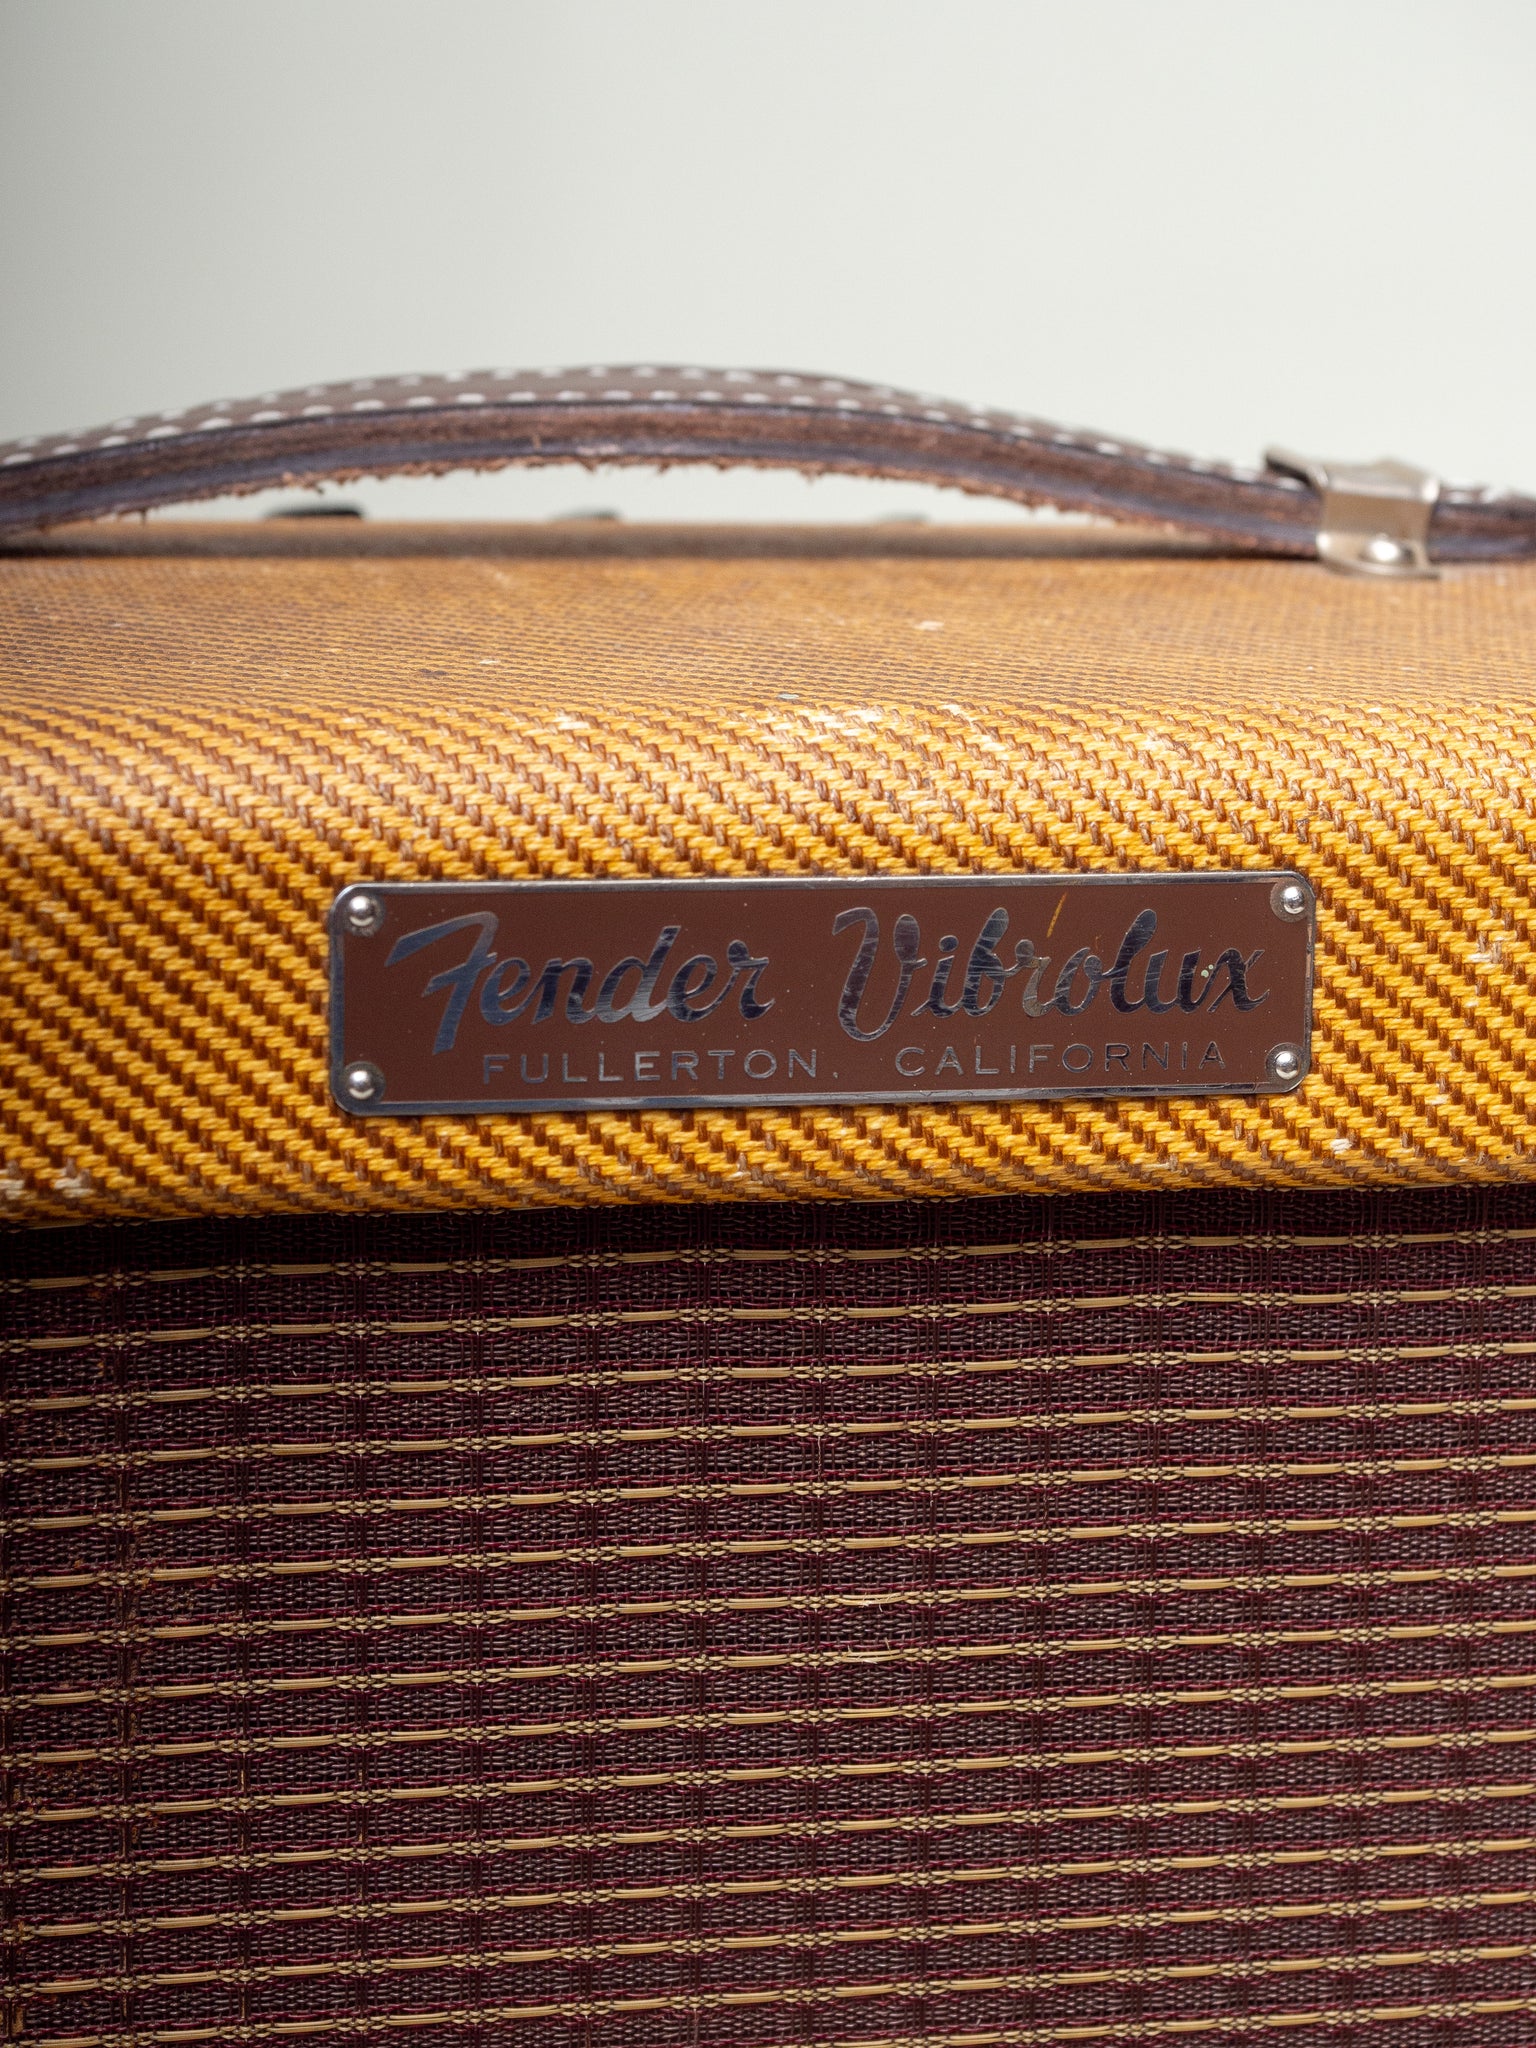 1959 Fender Vibrolux Tweed Model 5F11